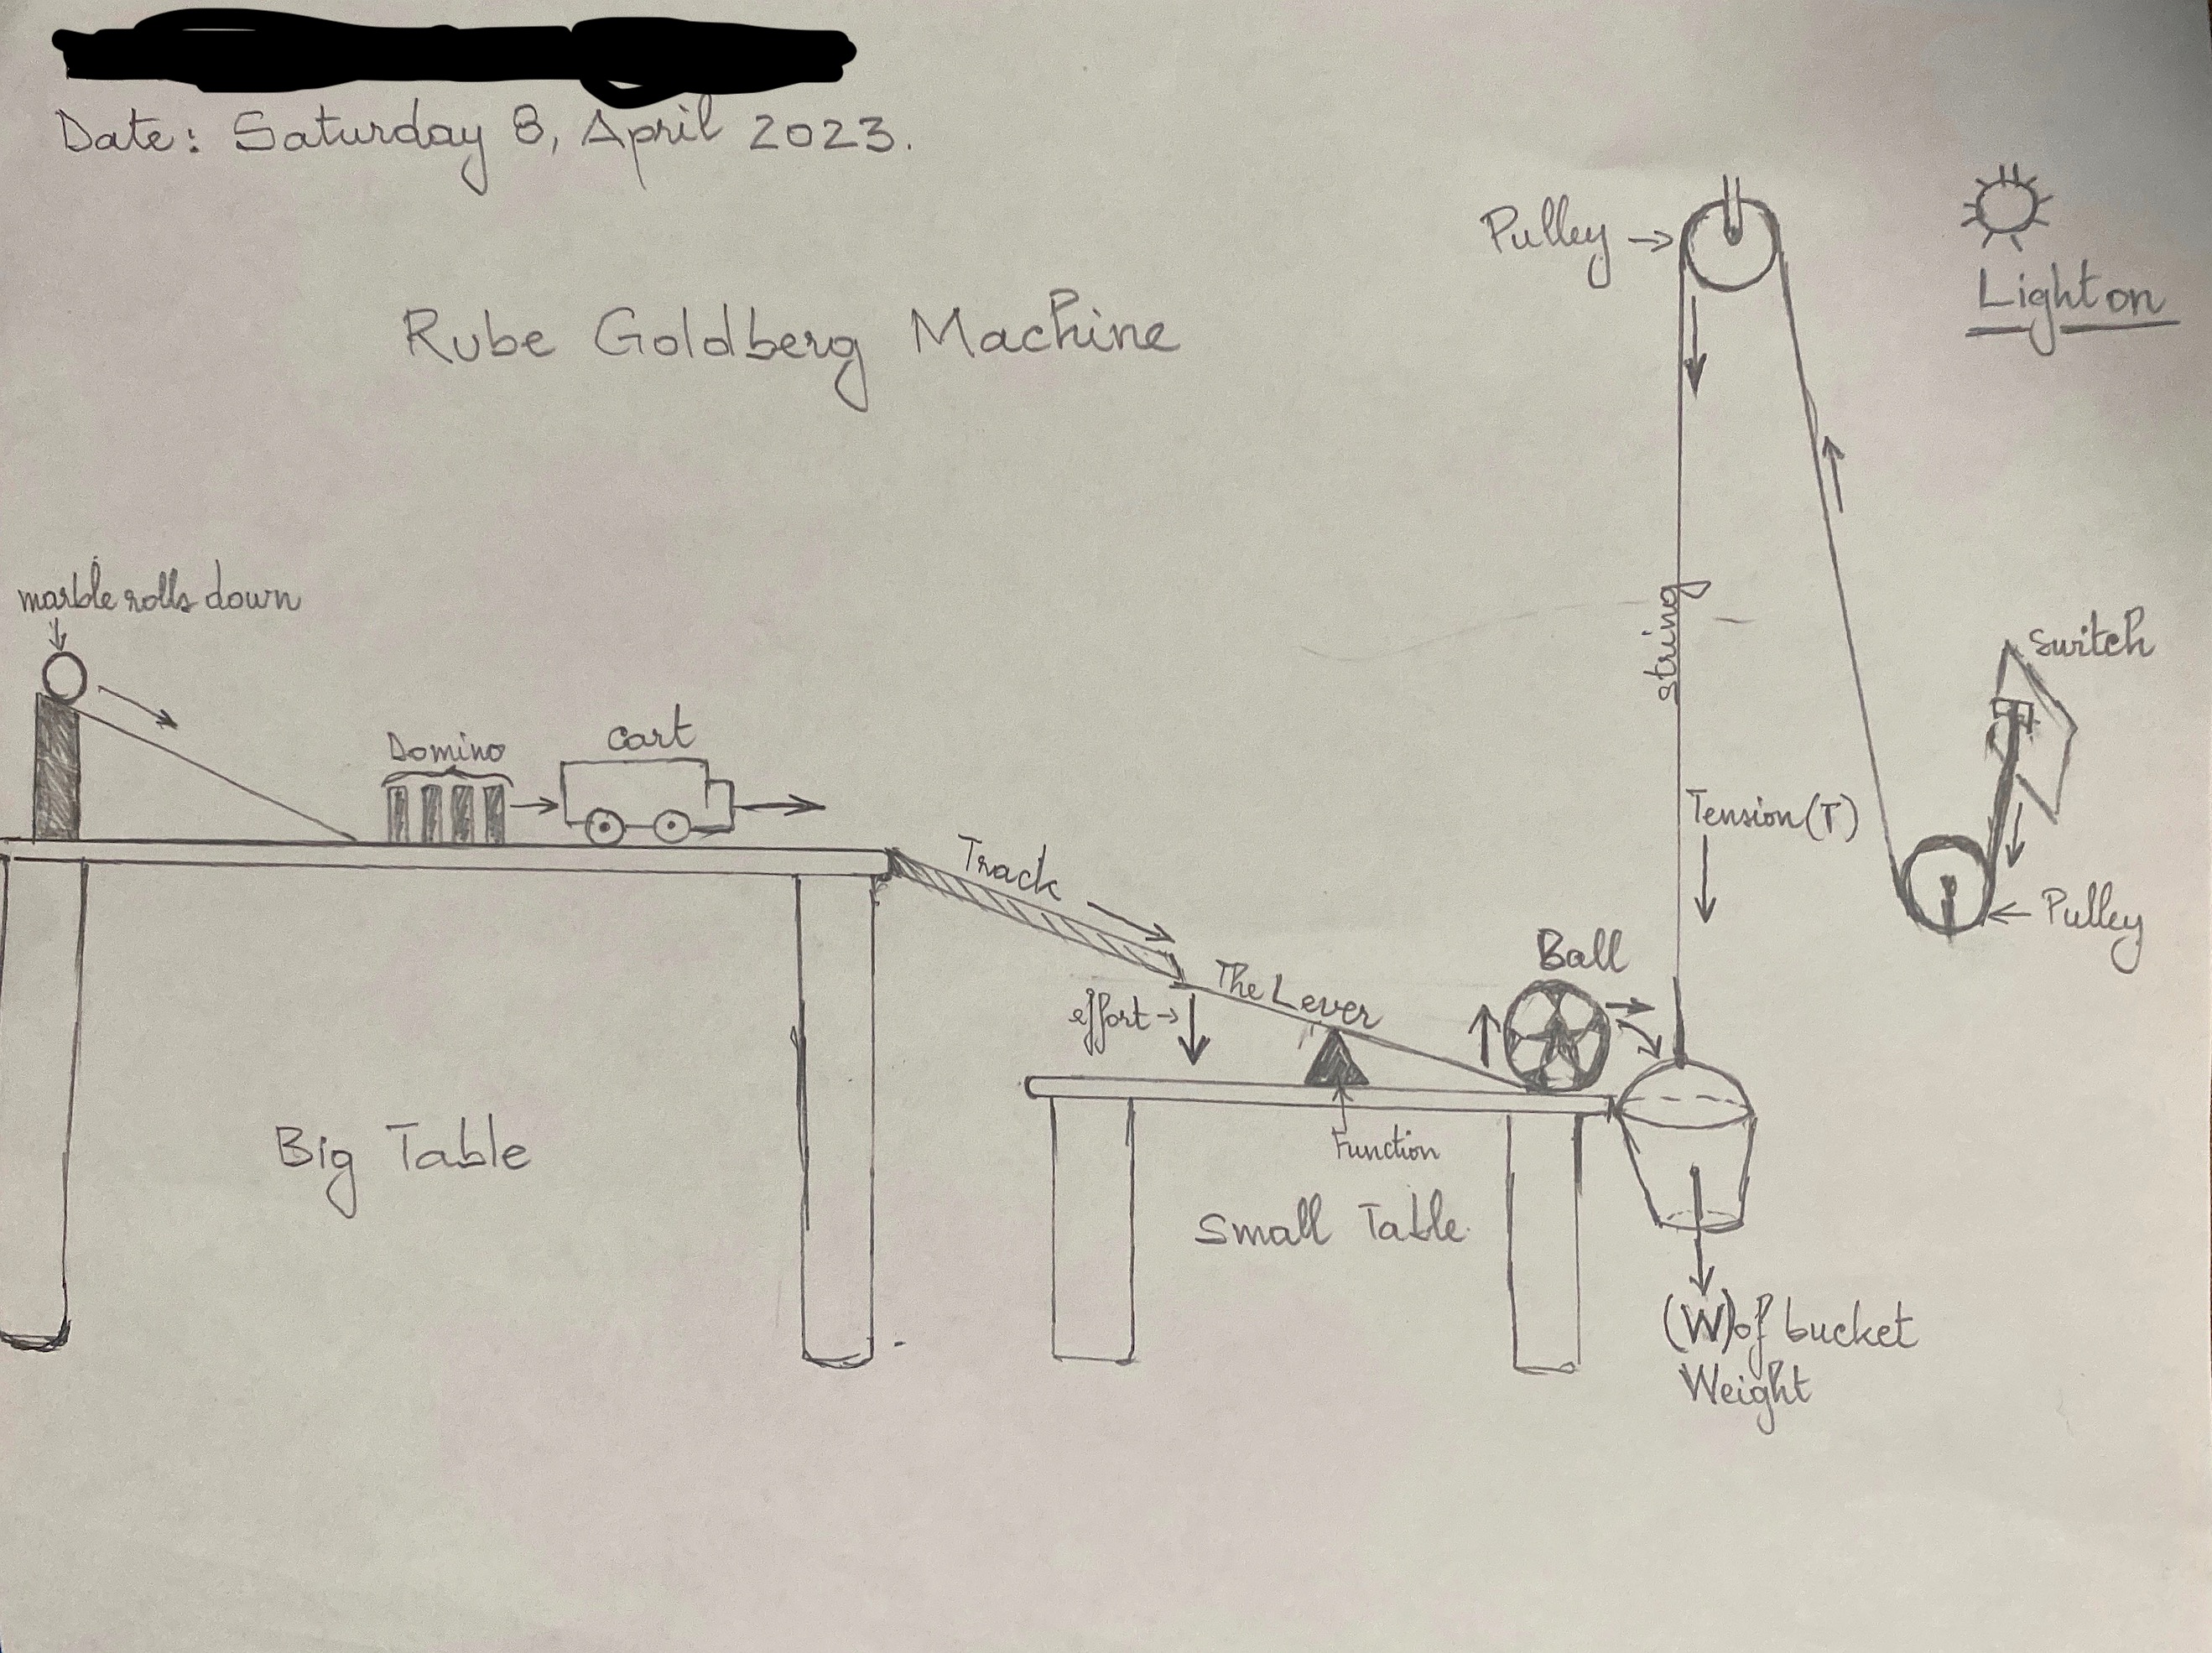 rube goldberg device drawing